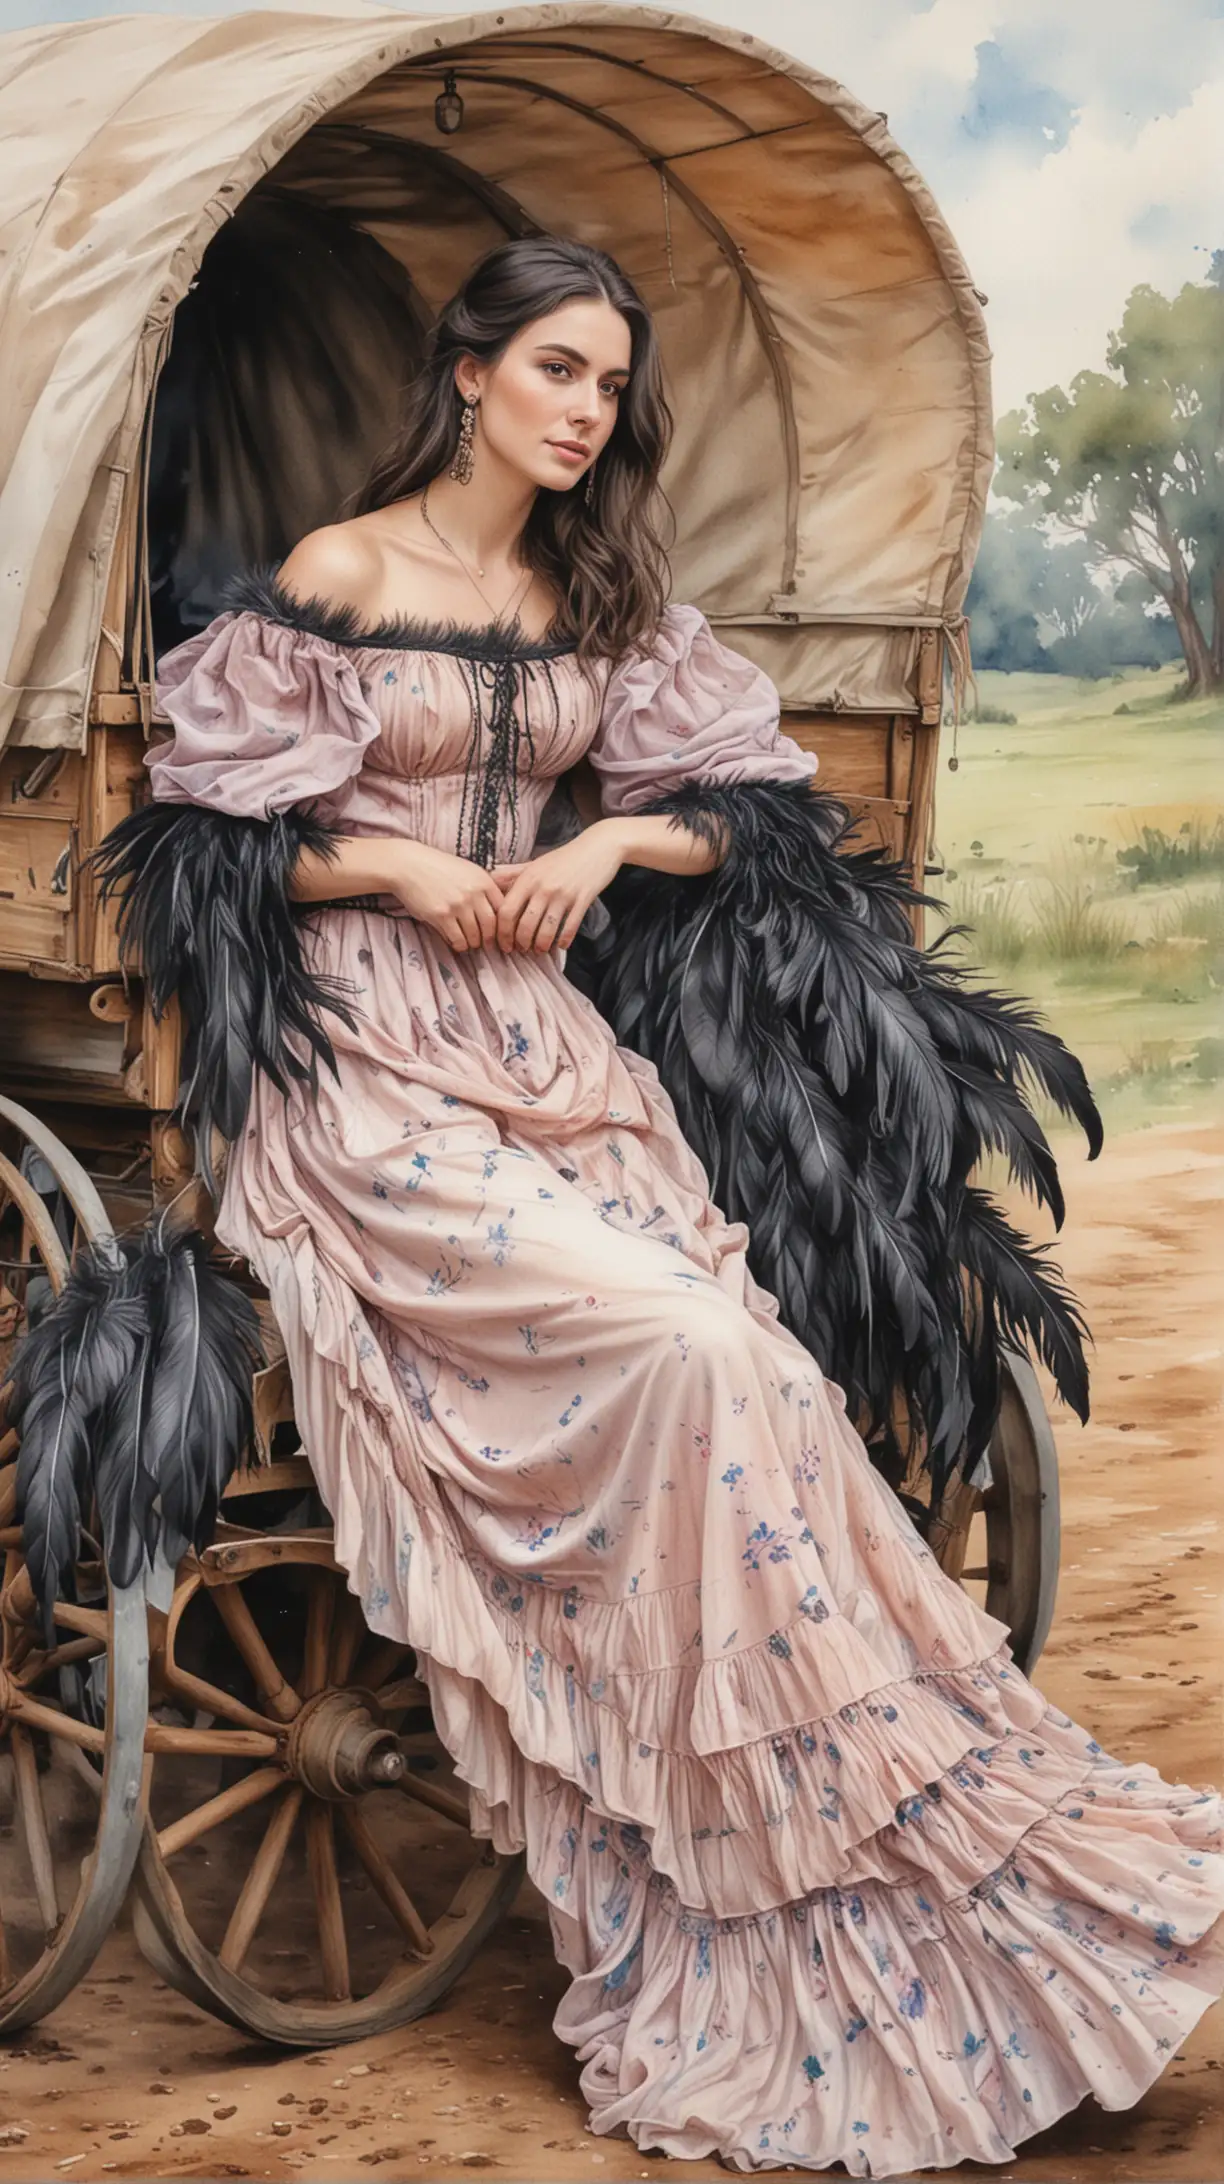 Romantic Watercolor Portrait Elegant Lady in Black Feathered Cape Inside a Romanian Gypsy Wagon